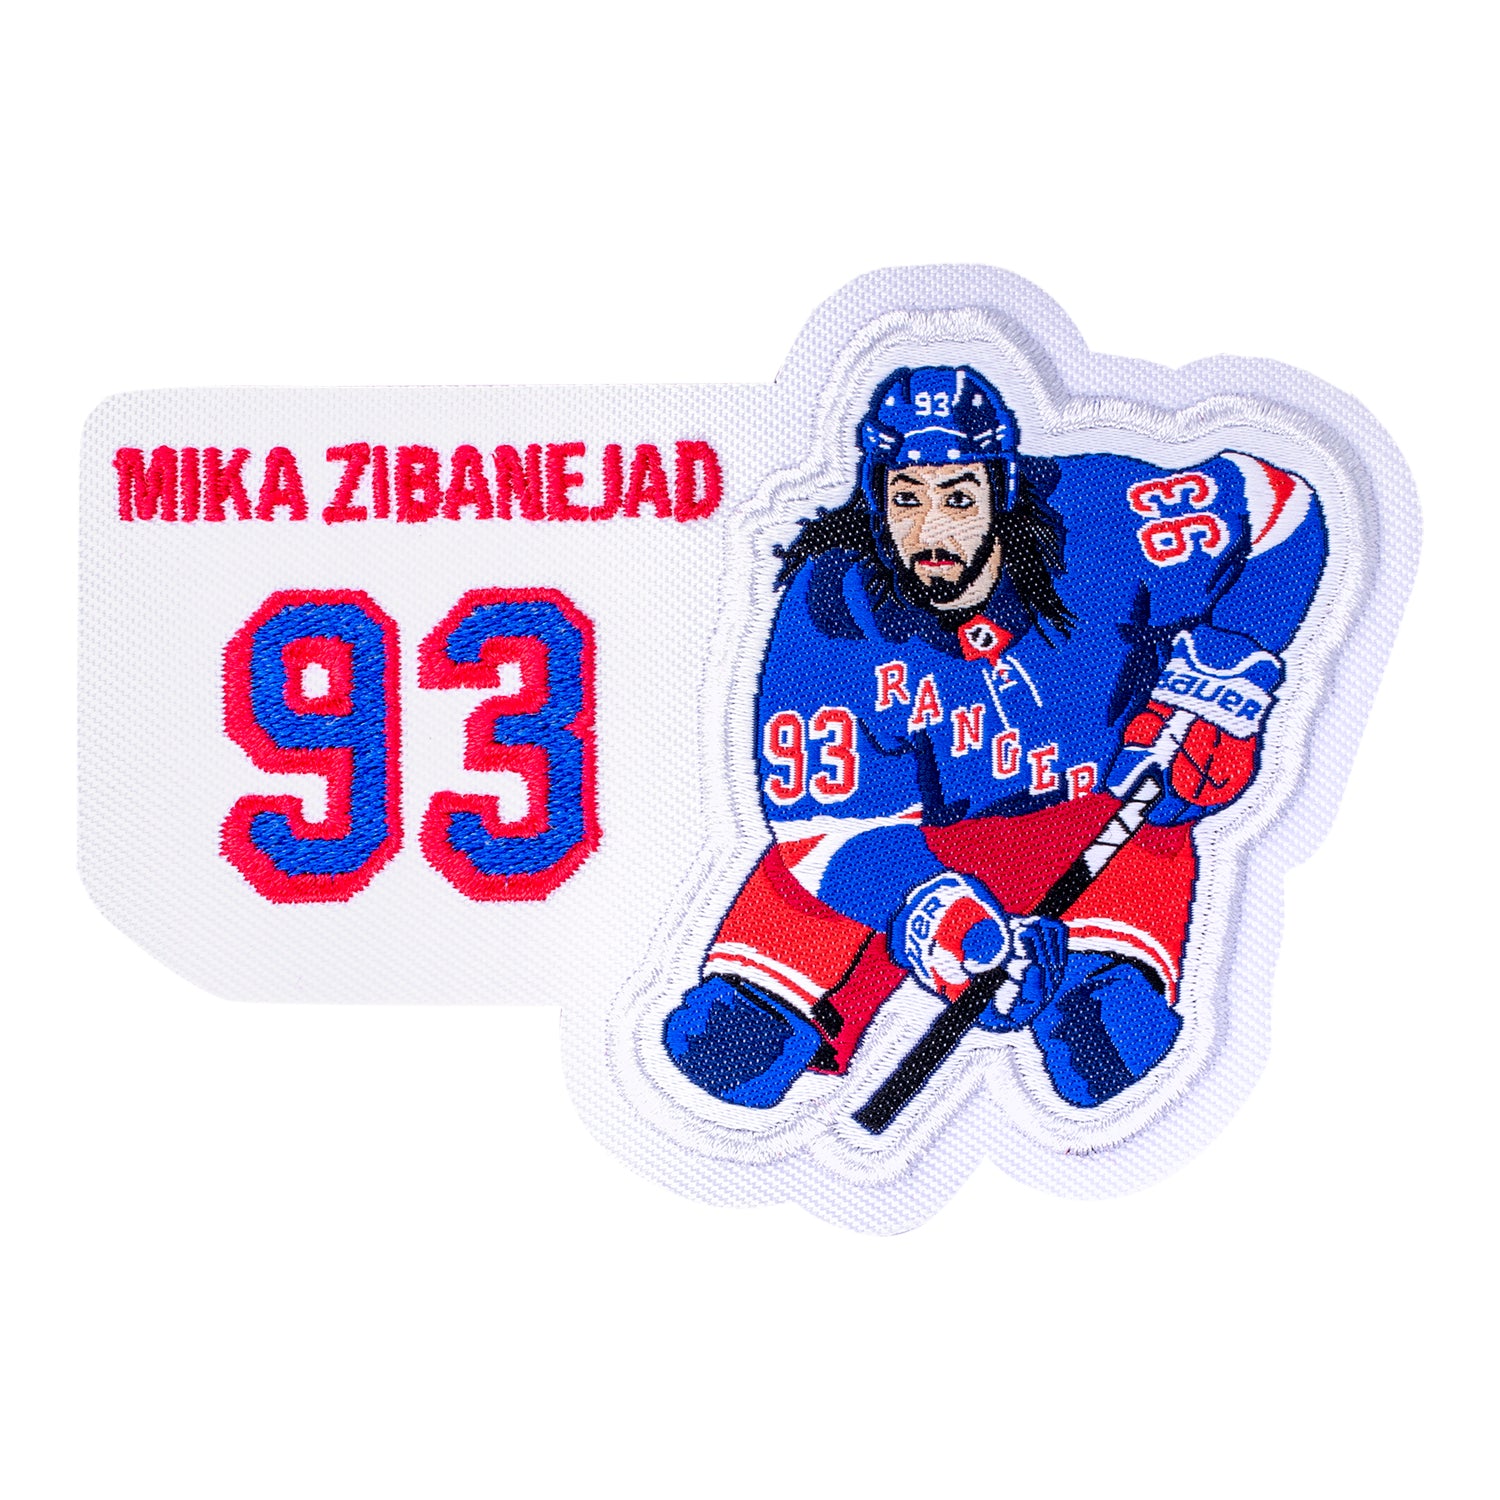 Mika Zibanejad NHL Original Autographed Items for sale